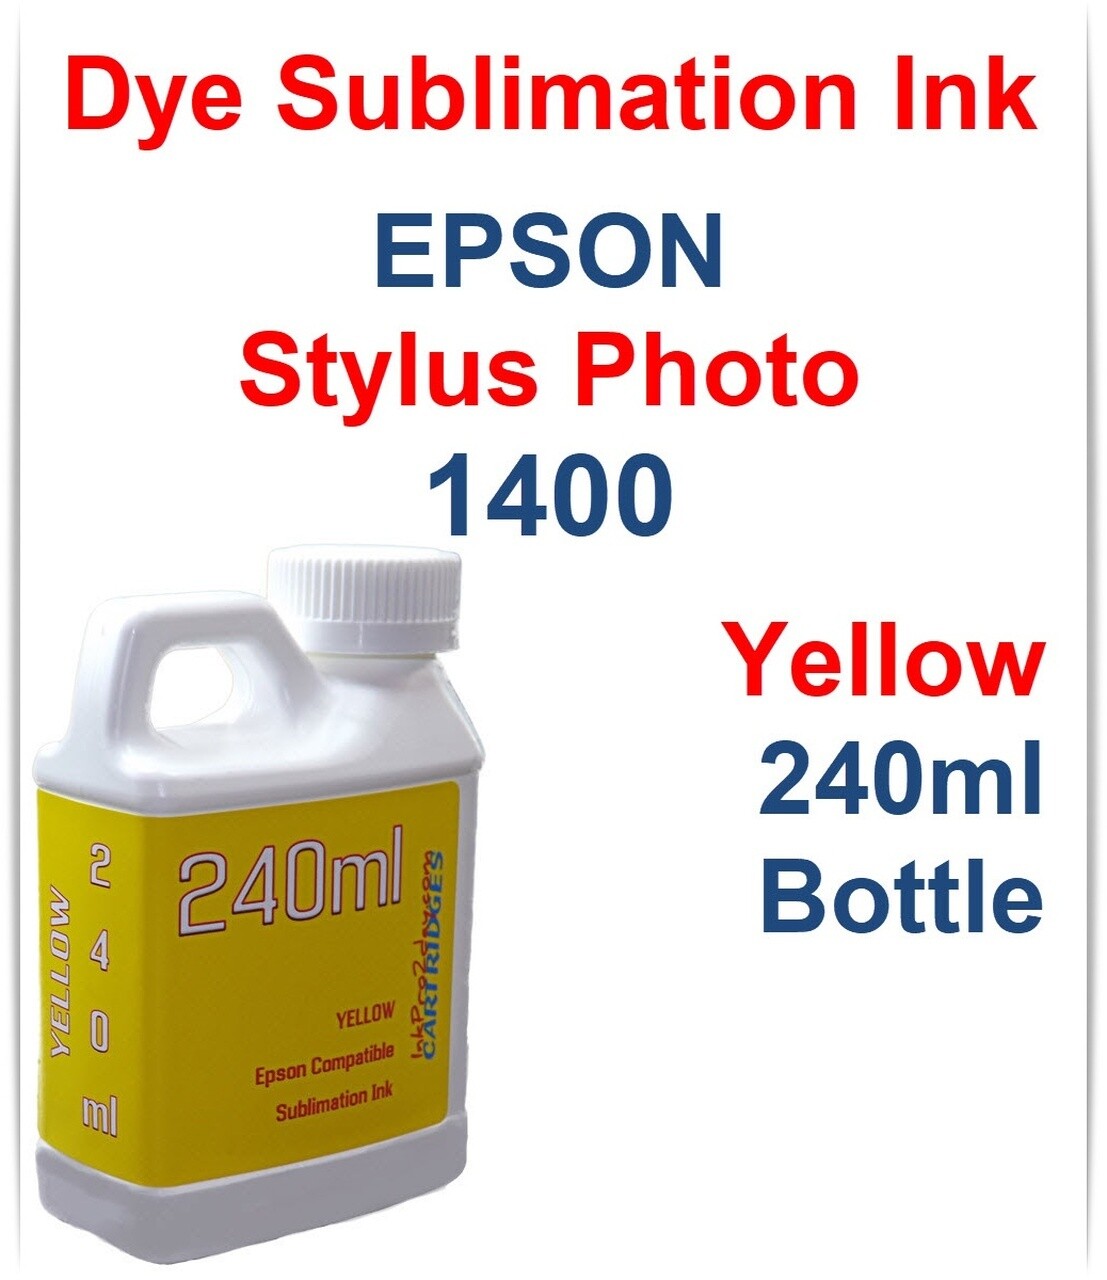 Yellow Dye Sublimation Ink 240ml bottle for Epson Stylus Photo 1400 Printer